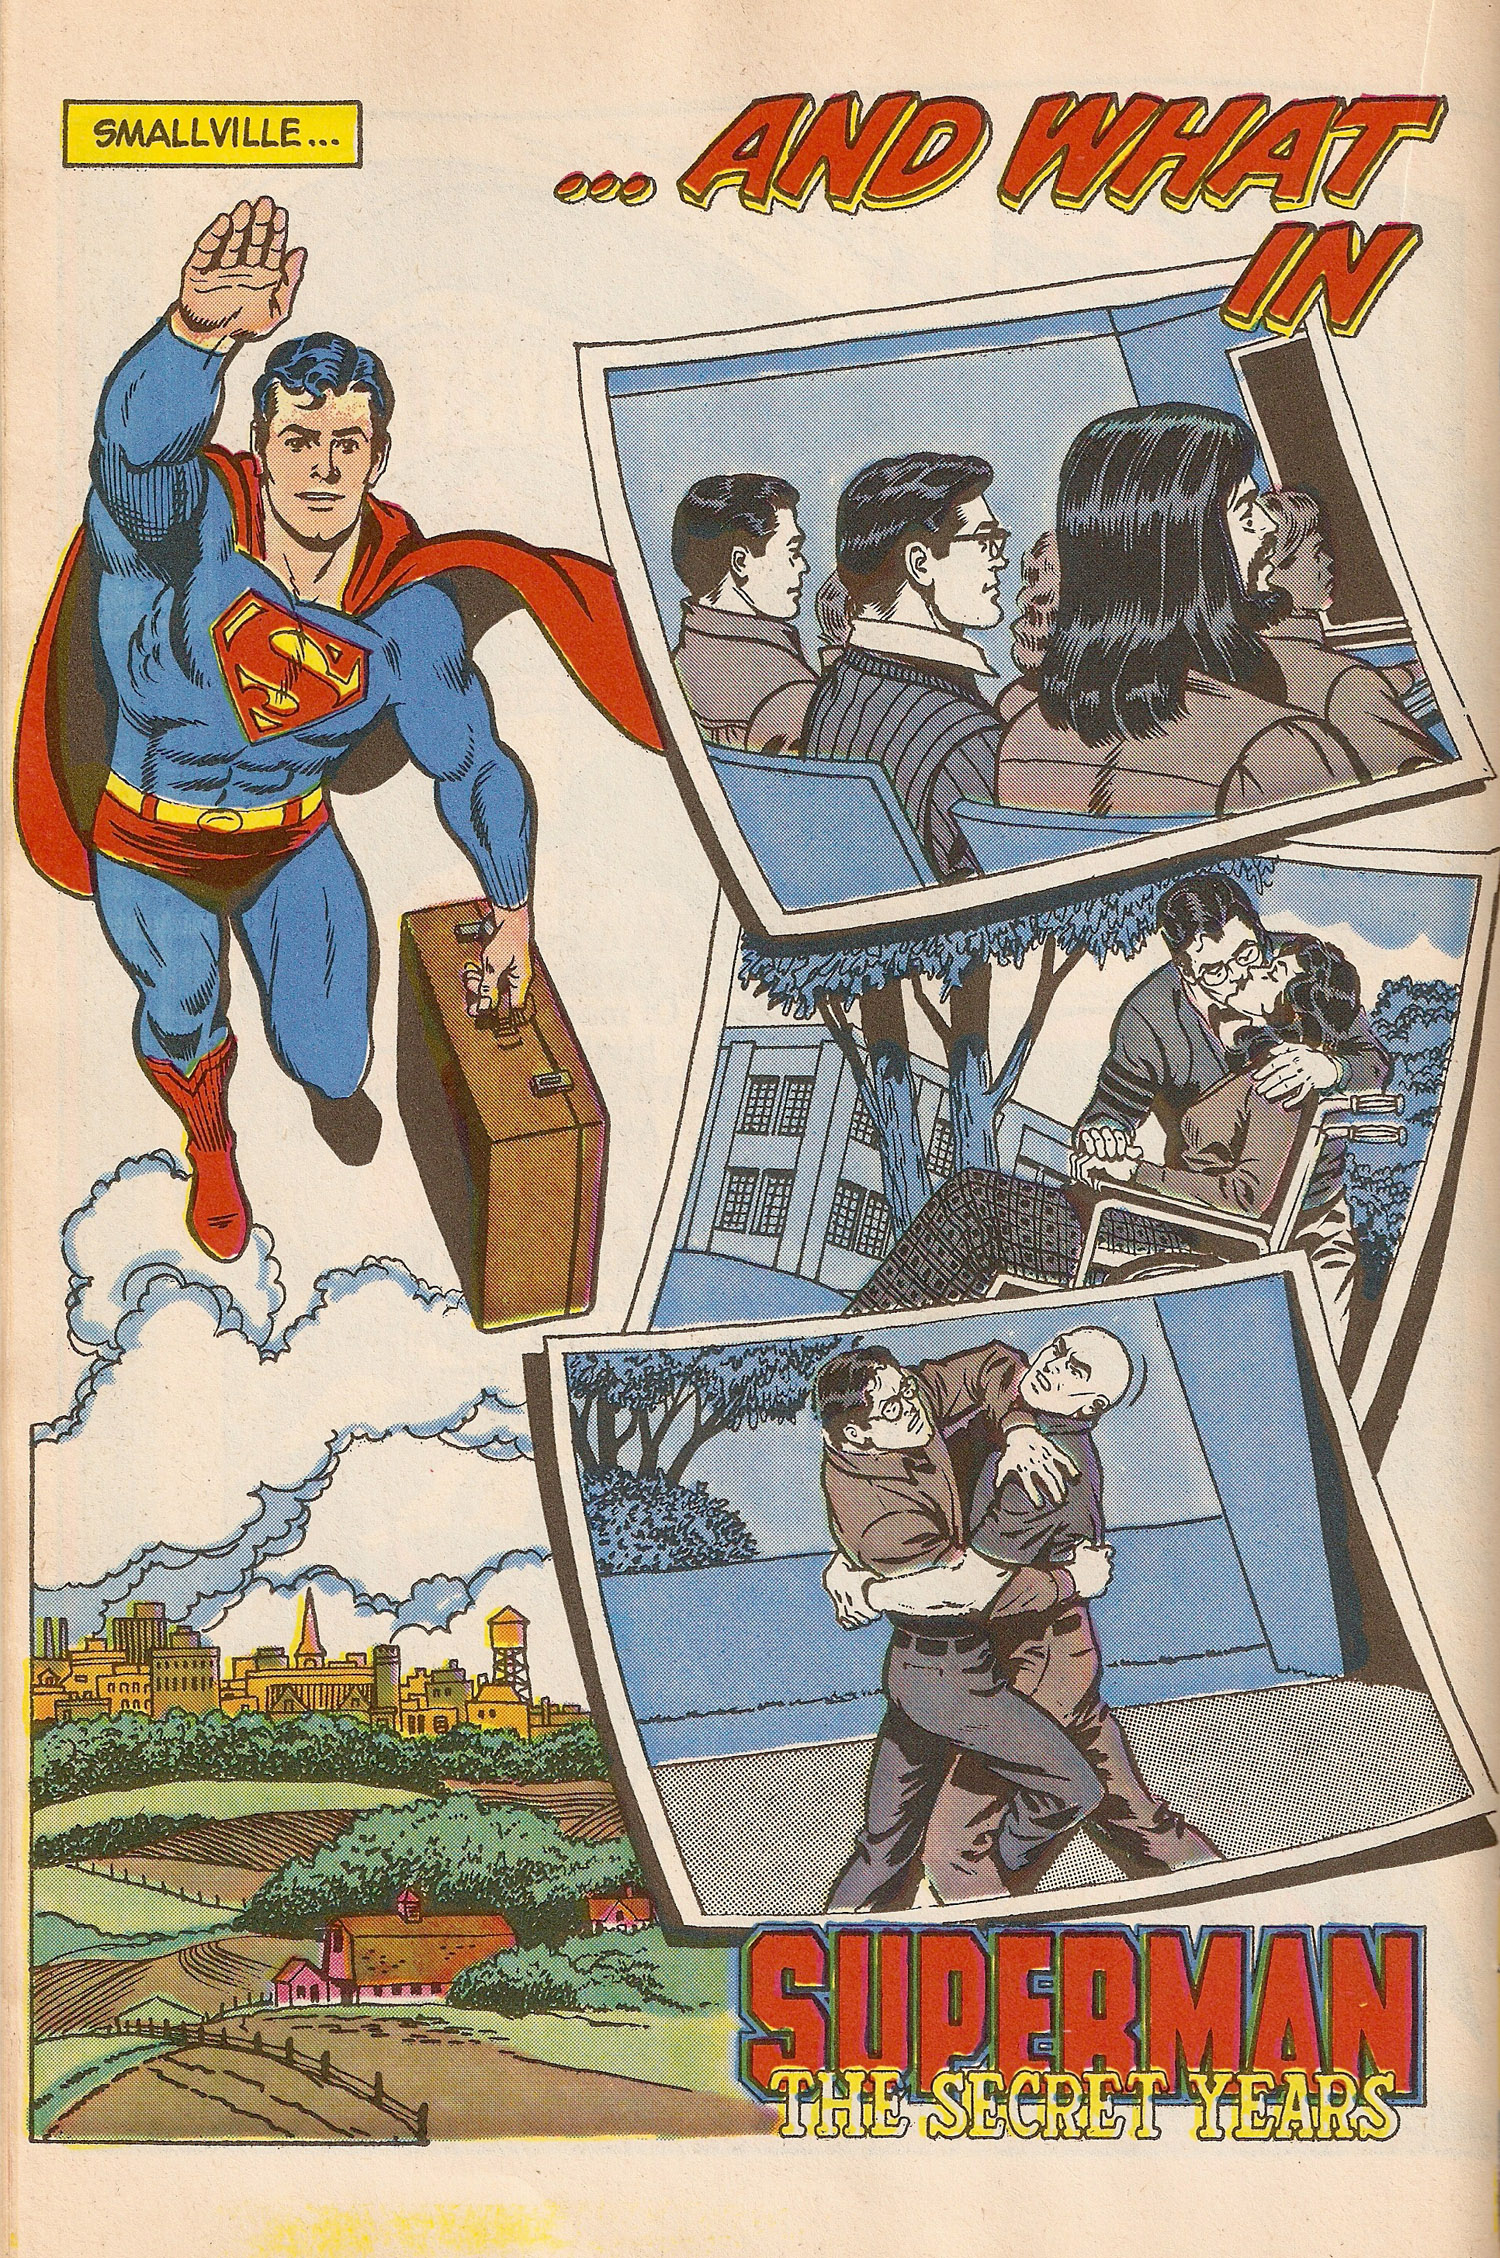 Superman Secret Years Ad 1